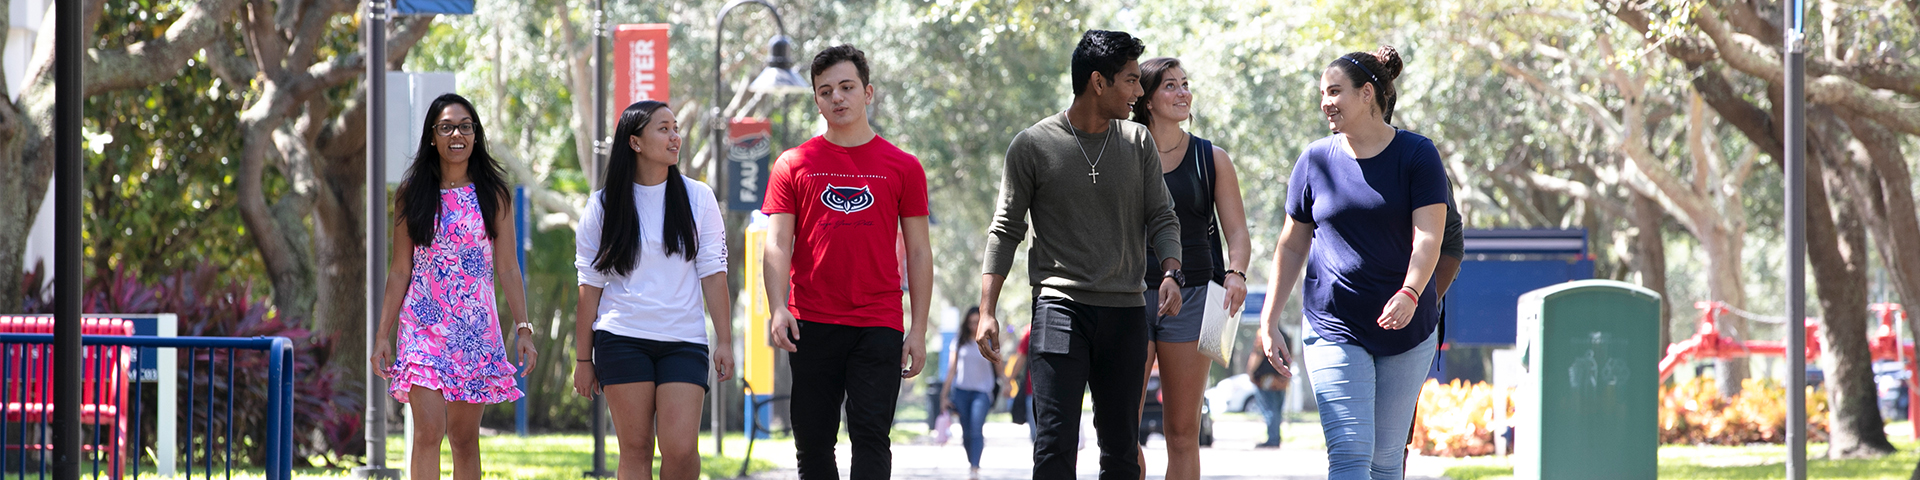 Students walking down campus sidewalk